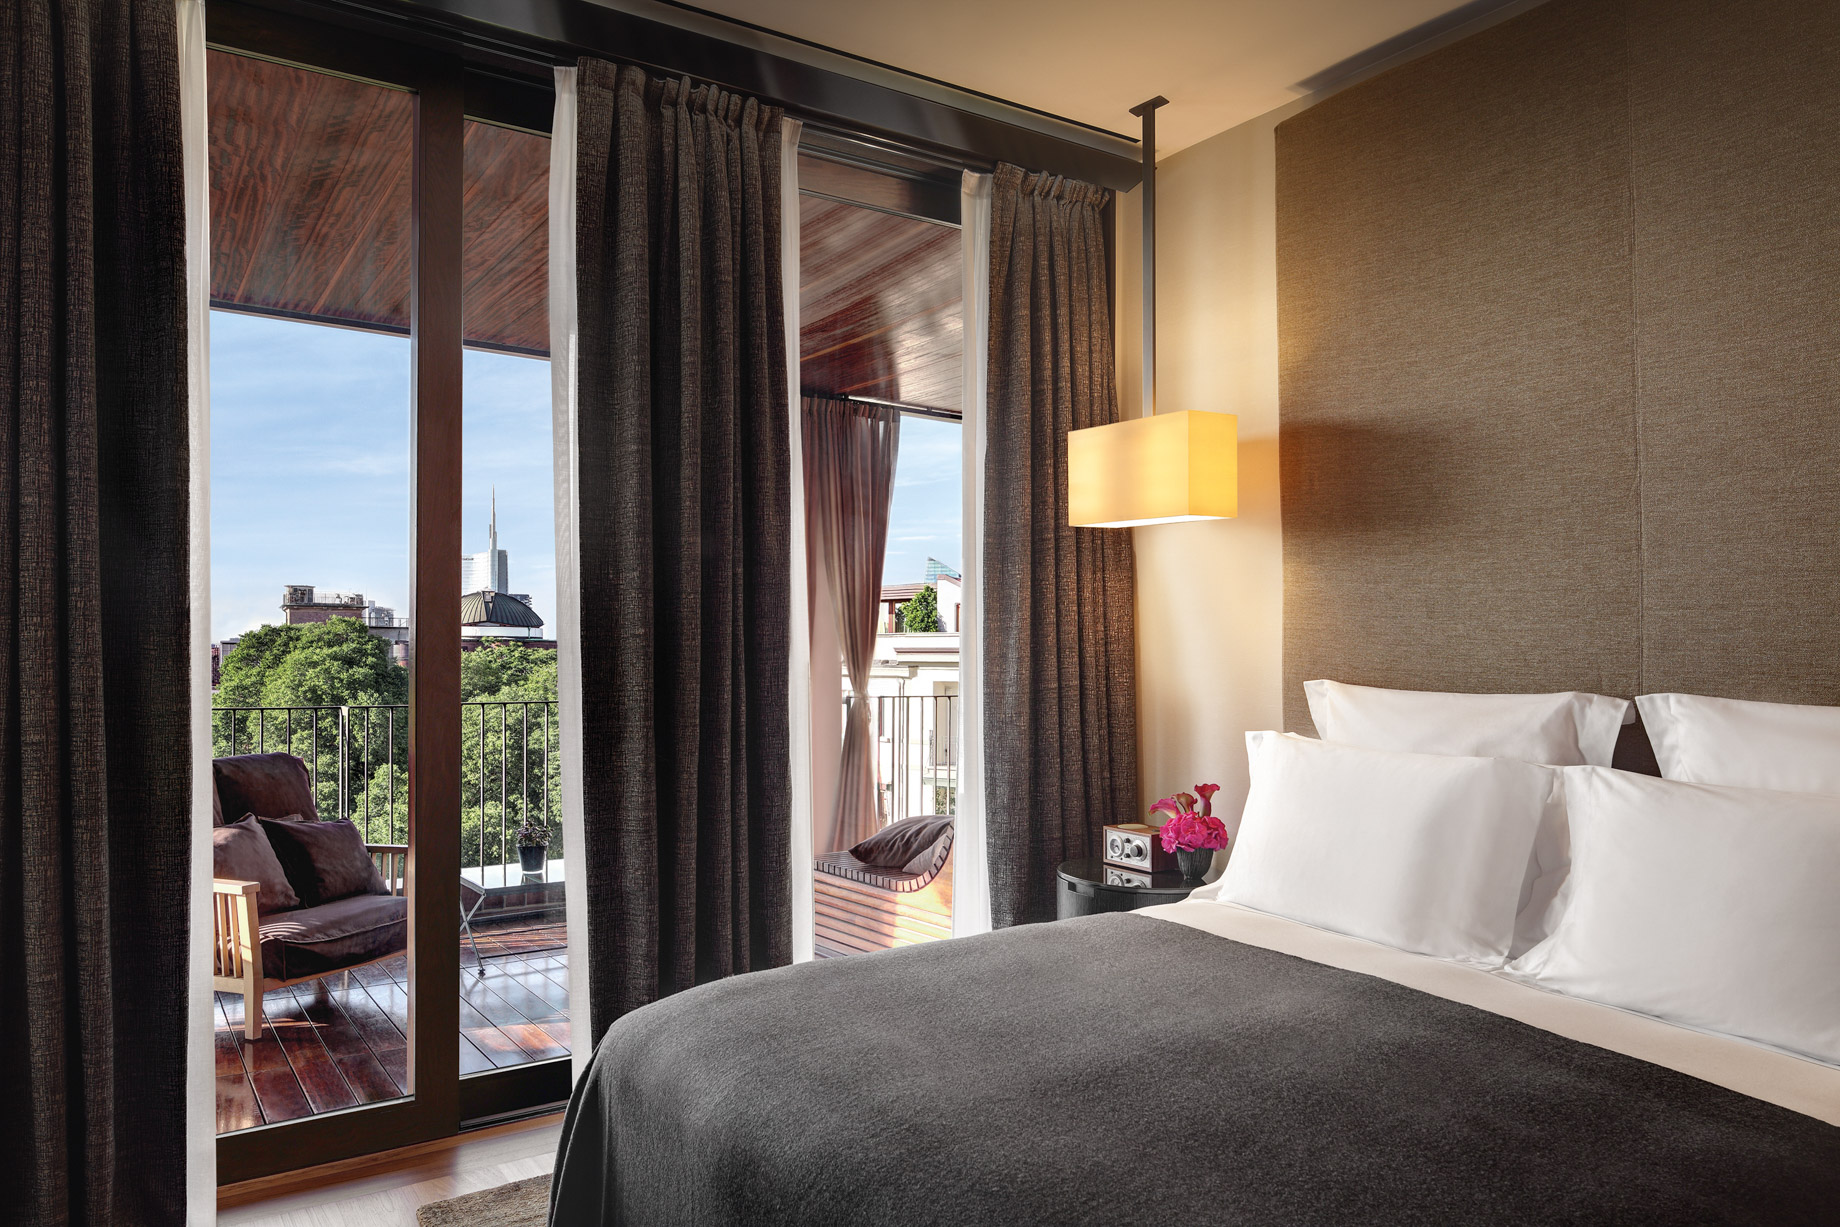 Bvlgari Hotel Milano – Milan, Italy – Bvlgari Suite Bedroom